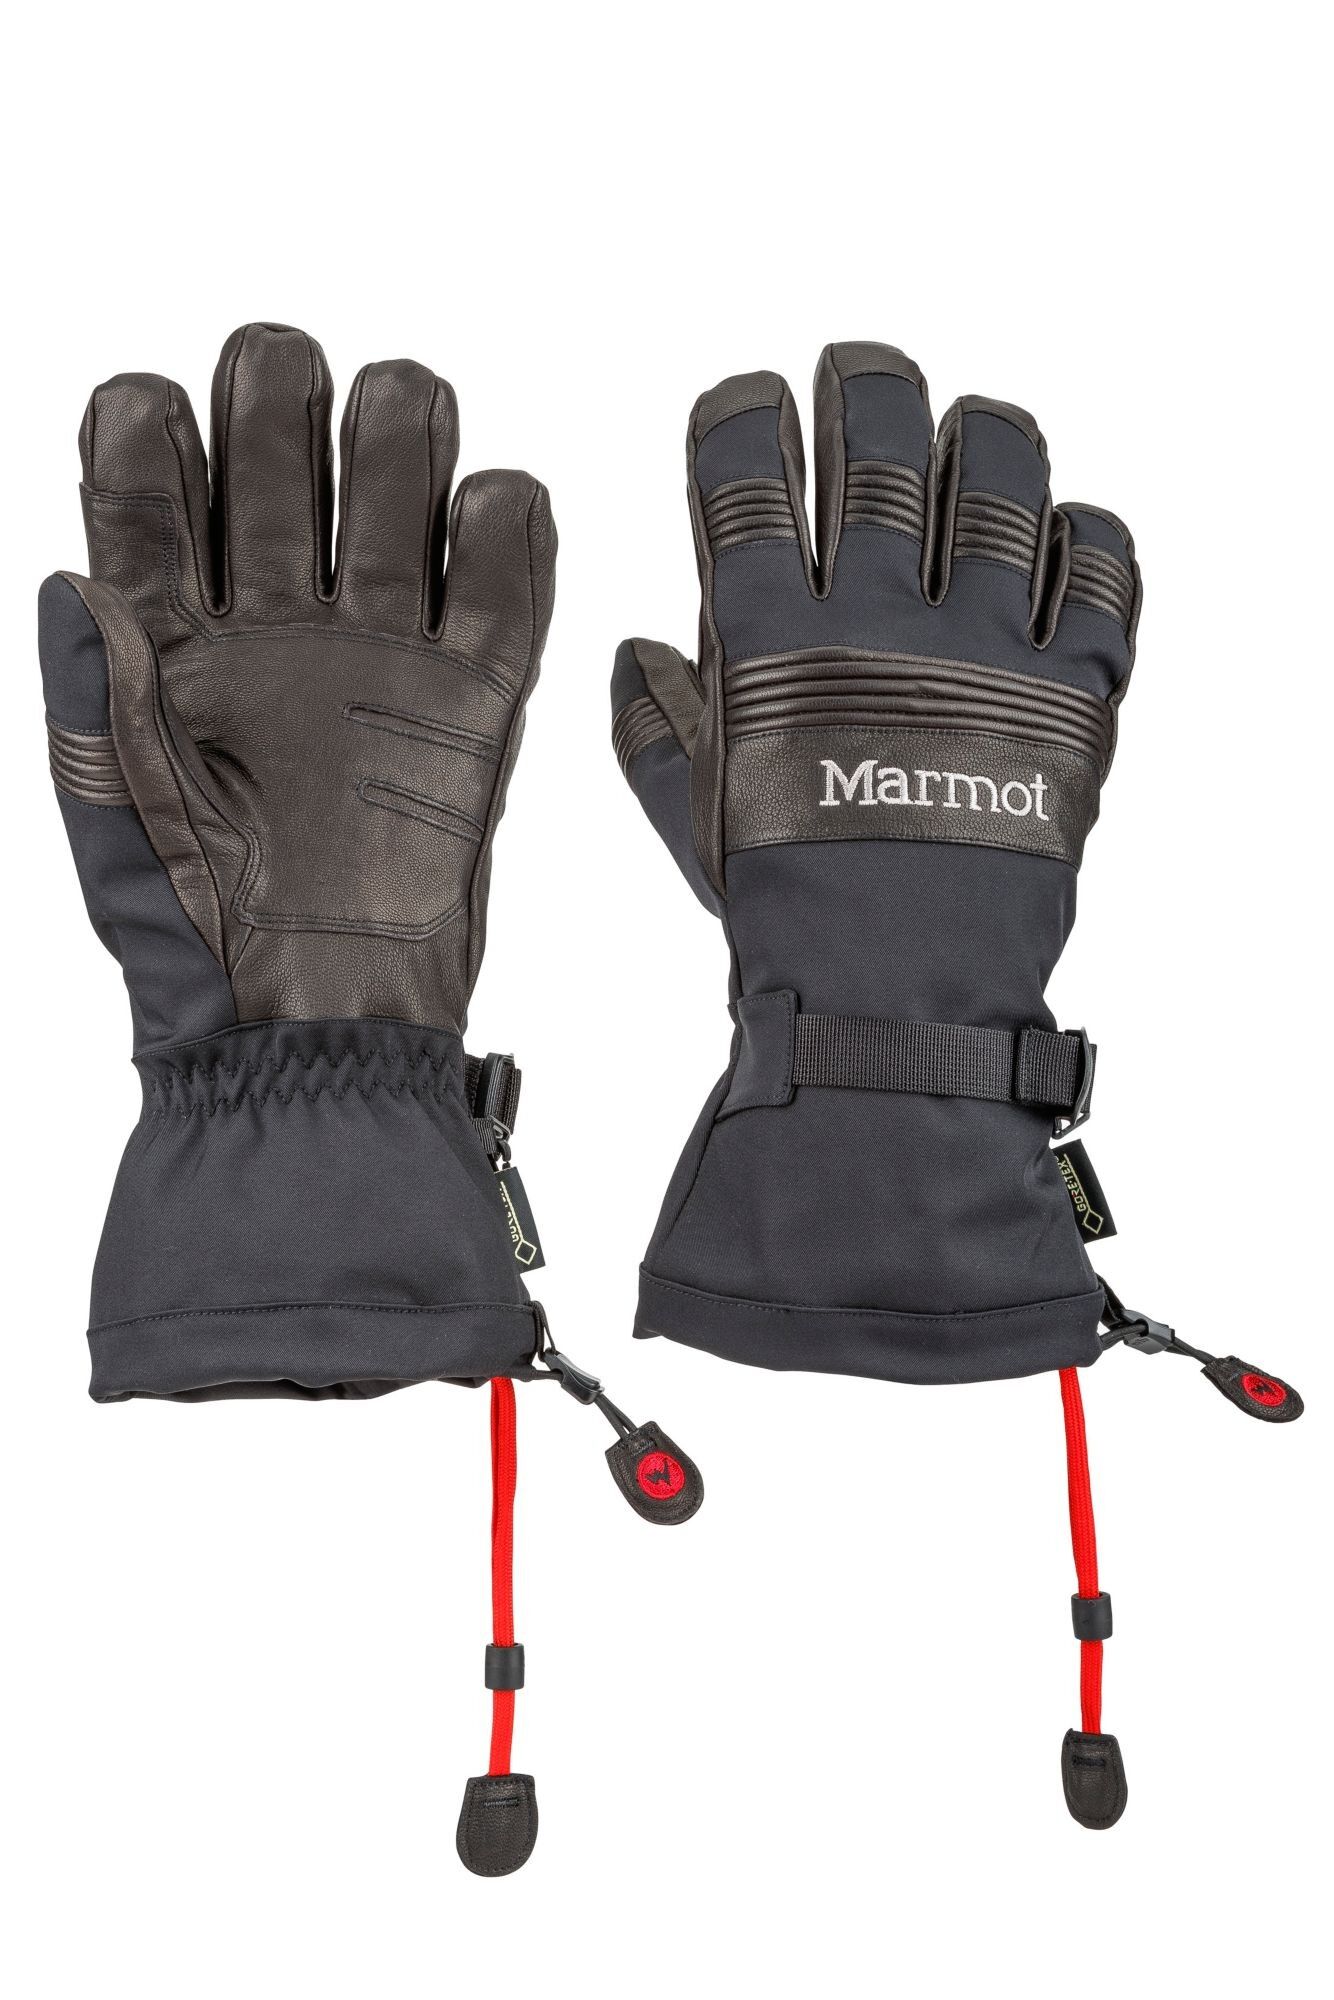 Marmot Ultimate Ski Glove - Hiihtohanskat